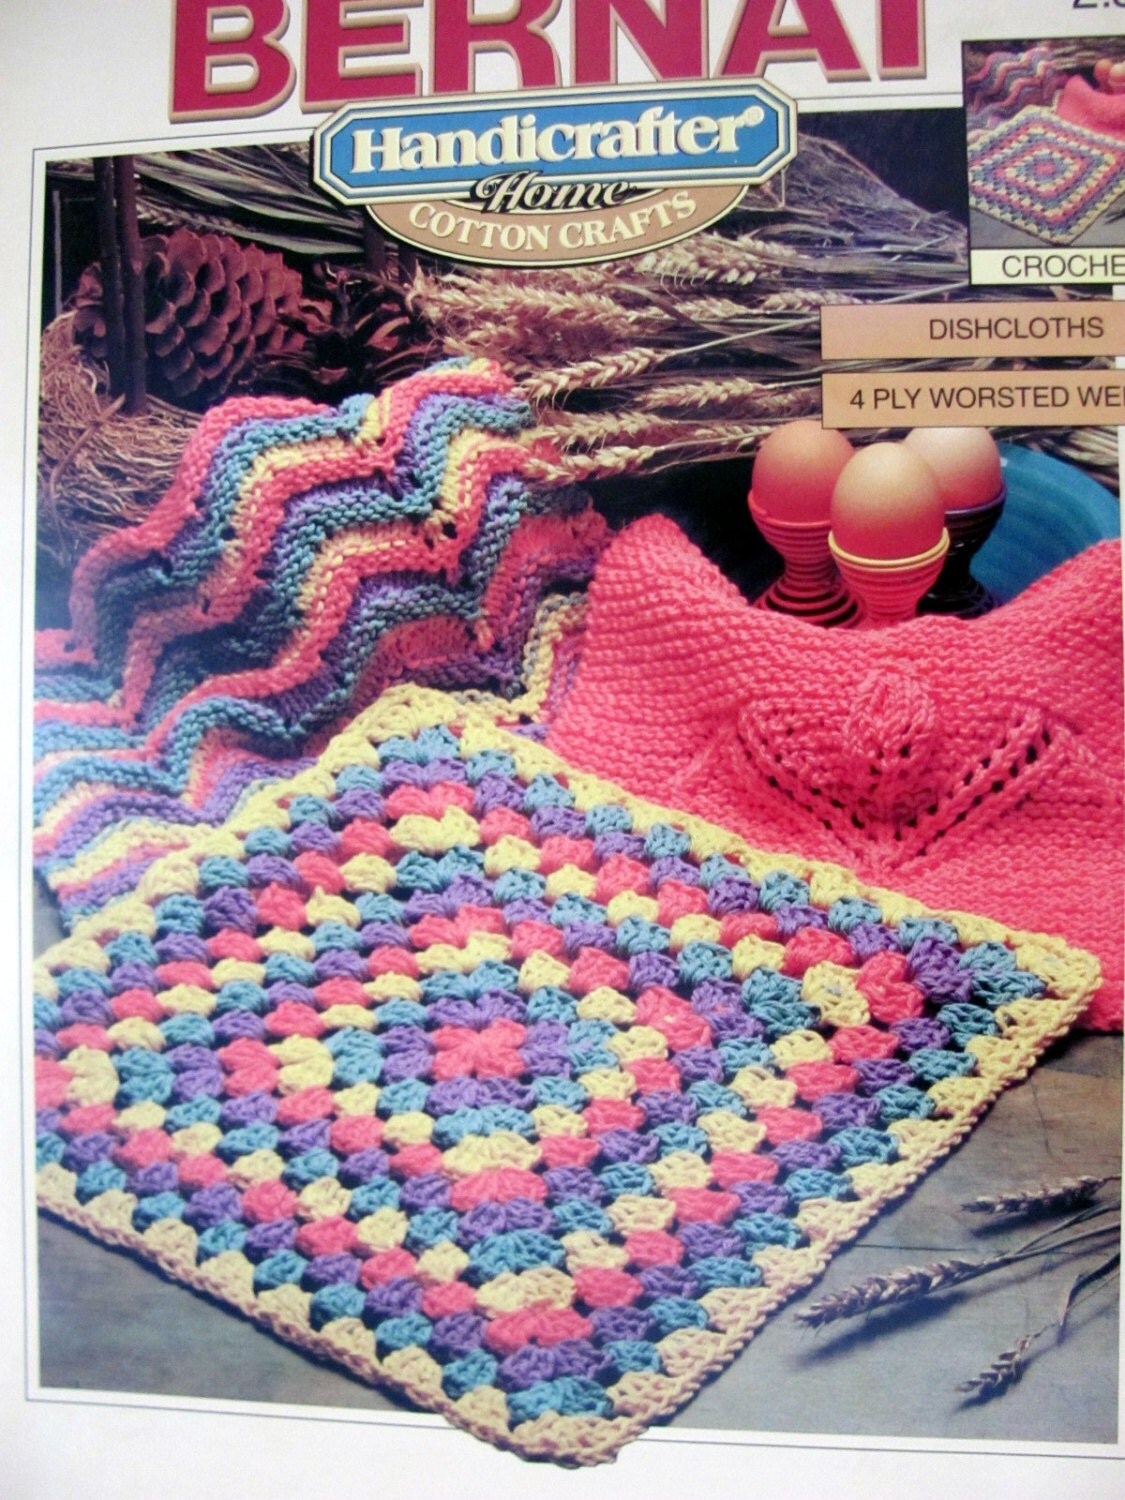 Bernat Handicrafter Dishcloths To Knit and Crochet Dishcloth